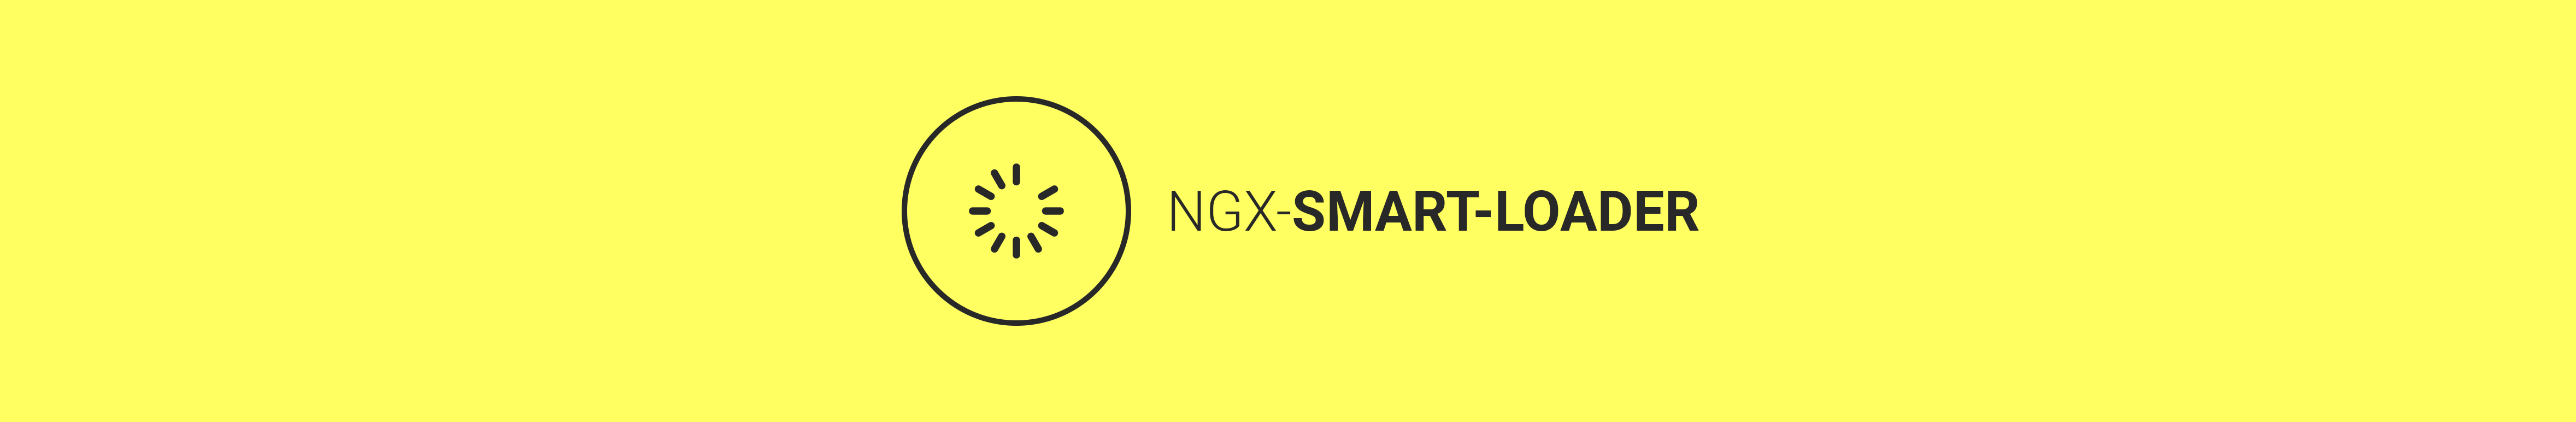 ngx-smart-loader